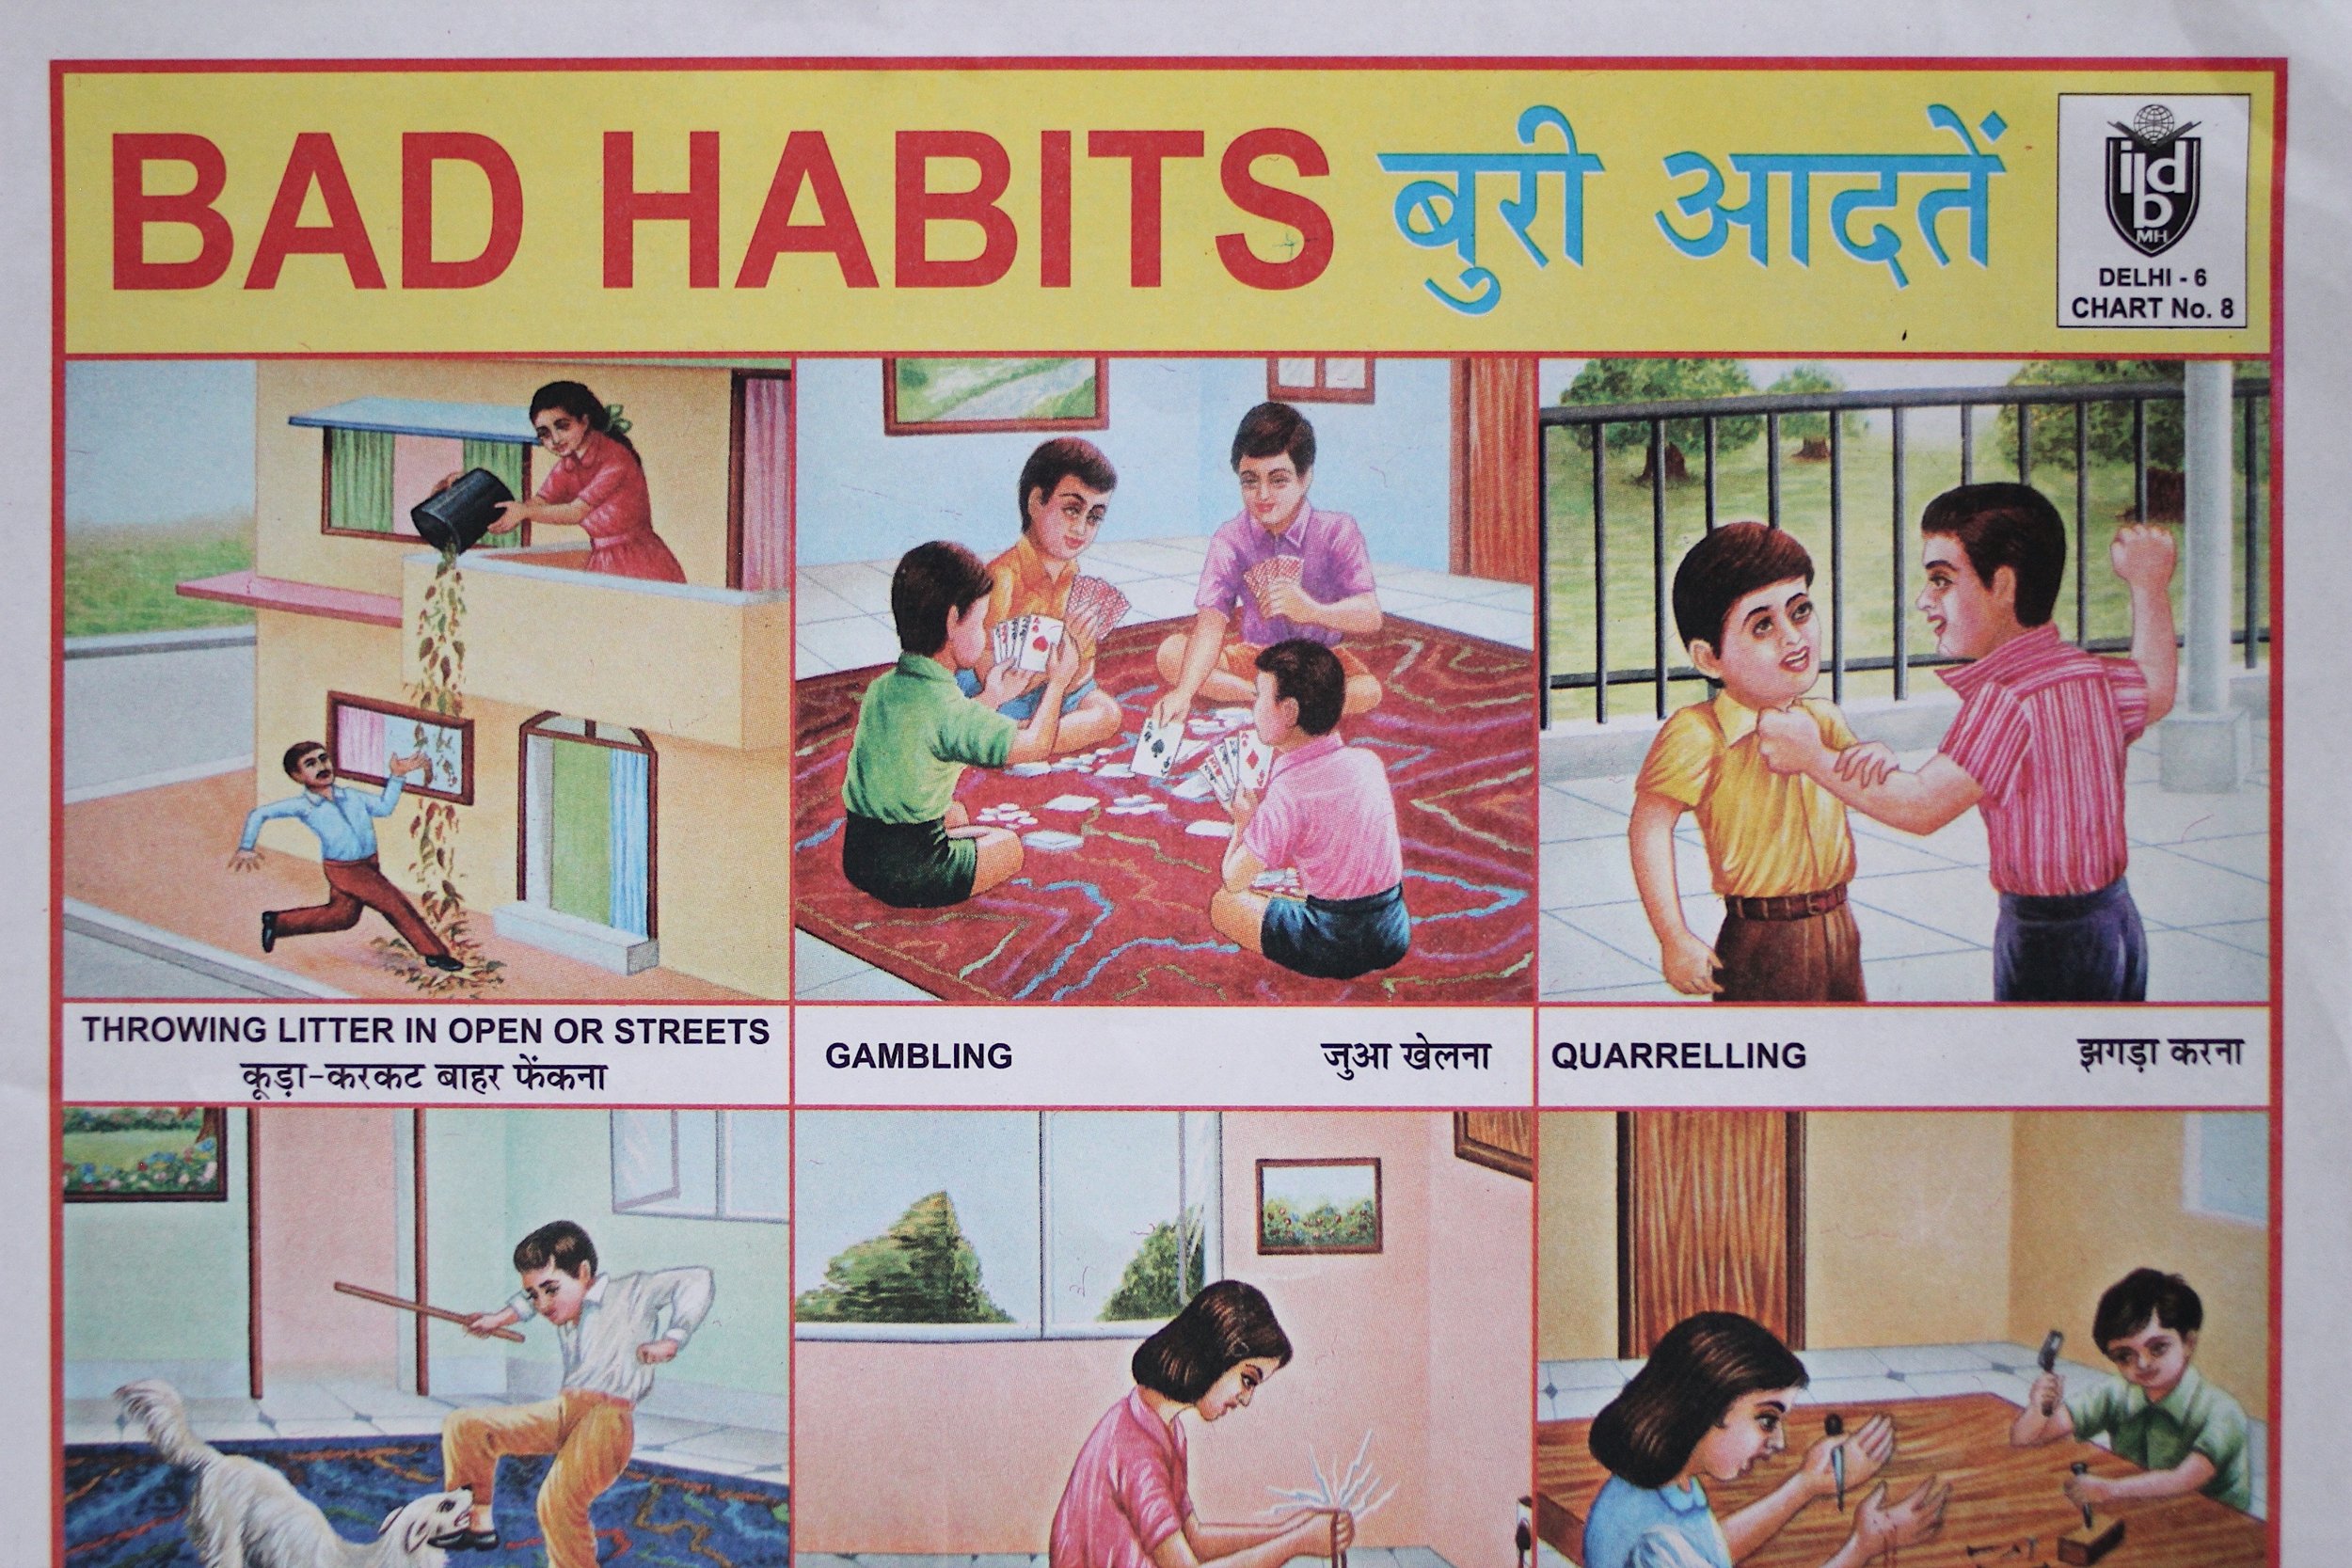 bad habits examples